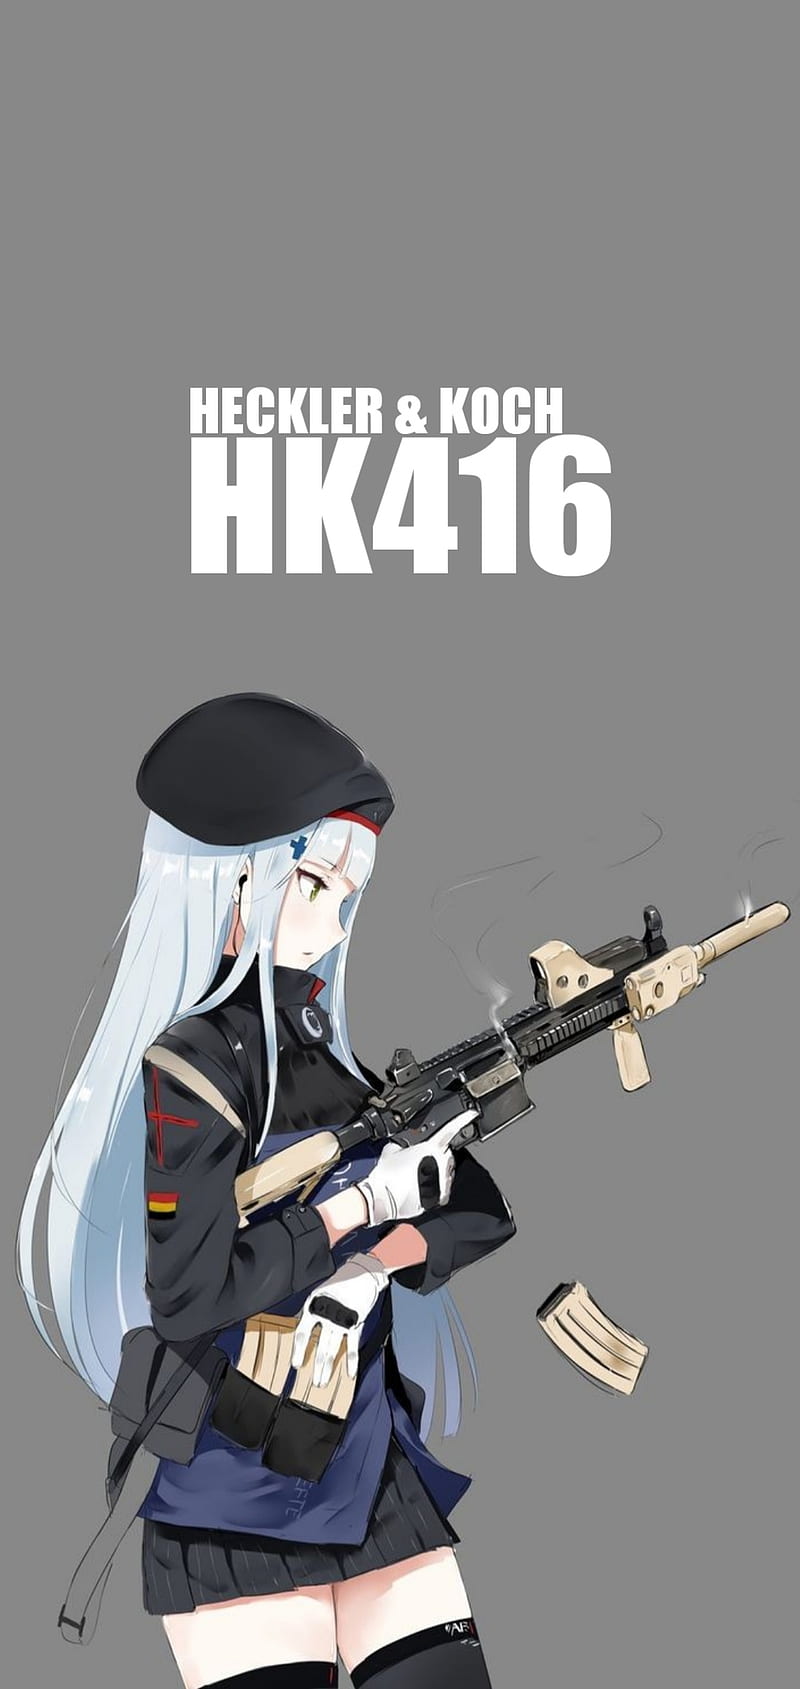 HD wallpaper black assault rifle weapons machine HK416 gun handgun  isolated  Wallpaper Flare